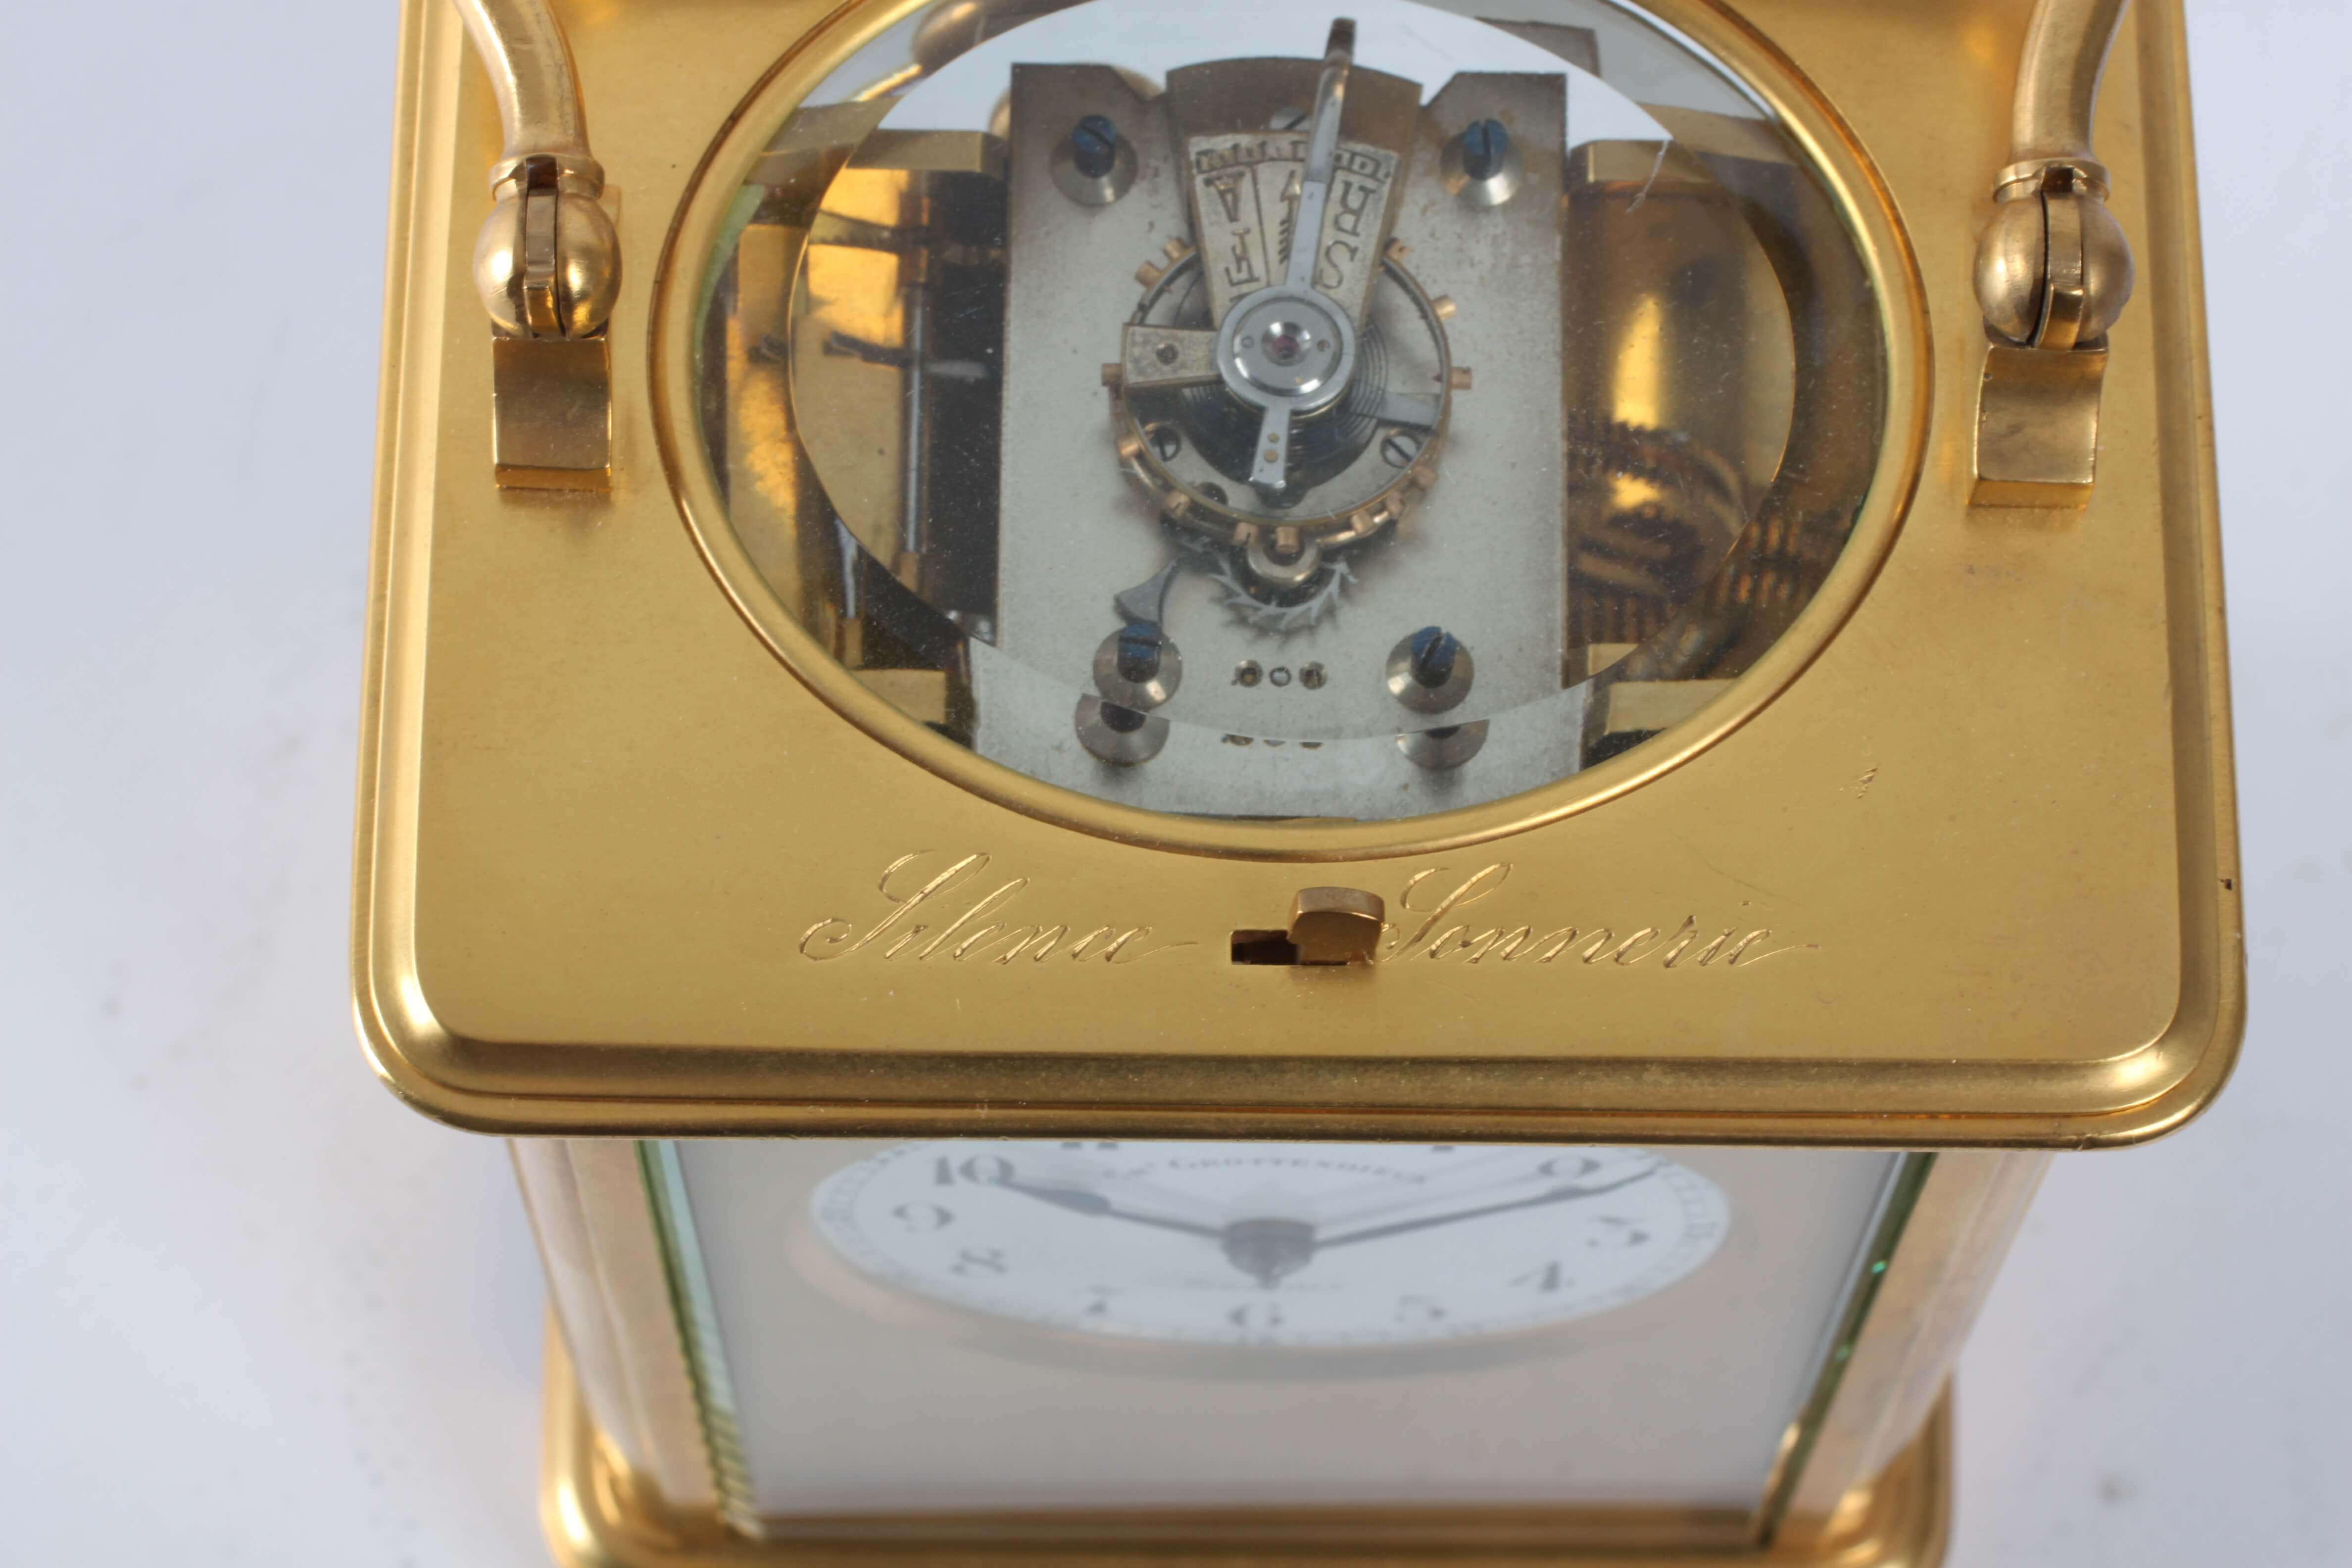 French corniche carriage clock Grottendieck repeater 1870